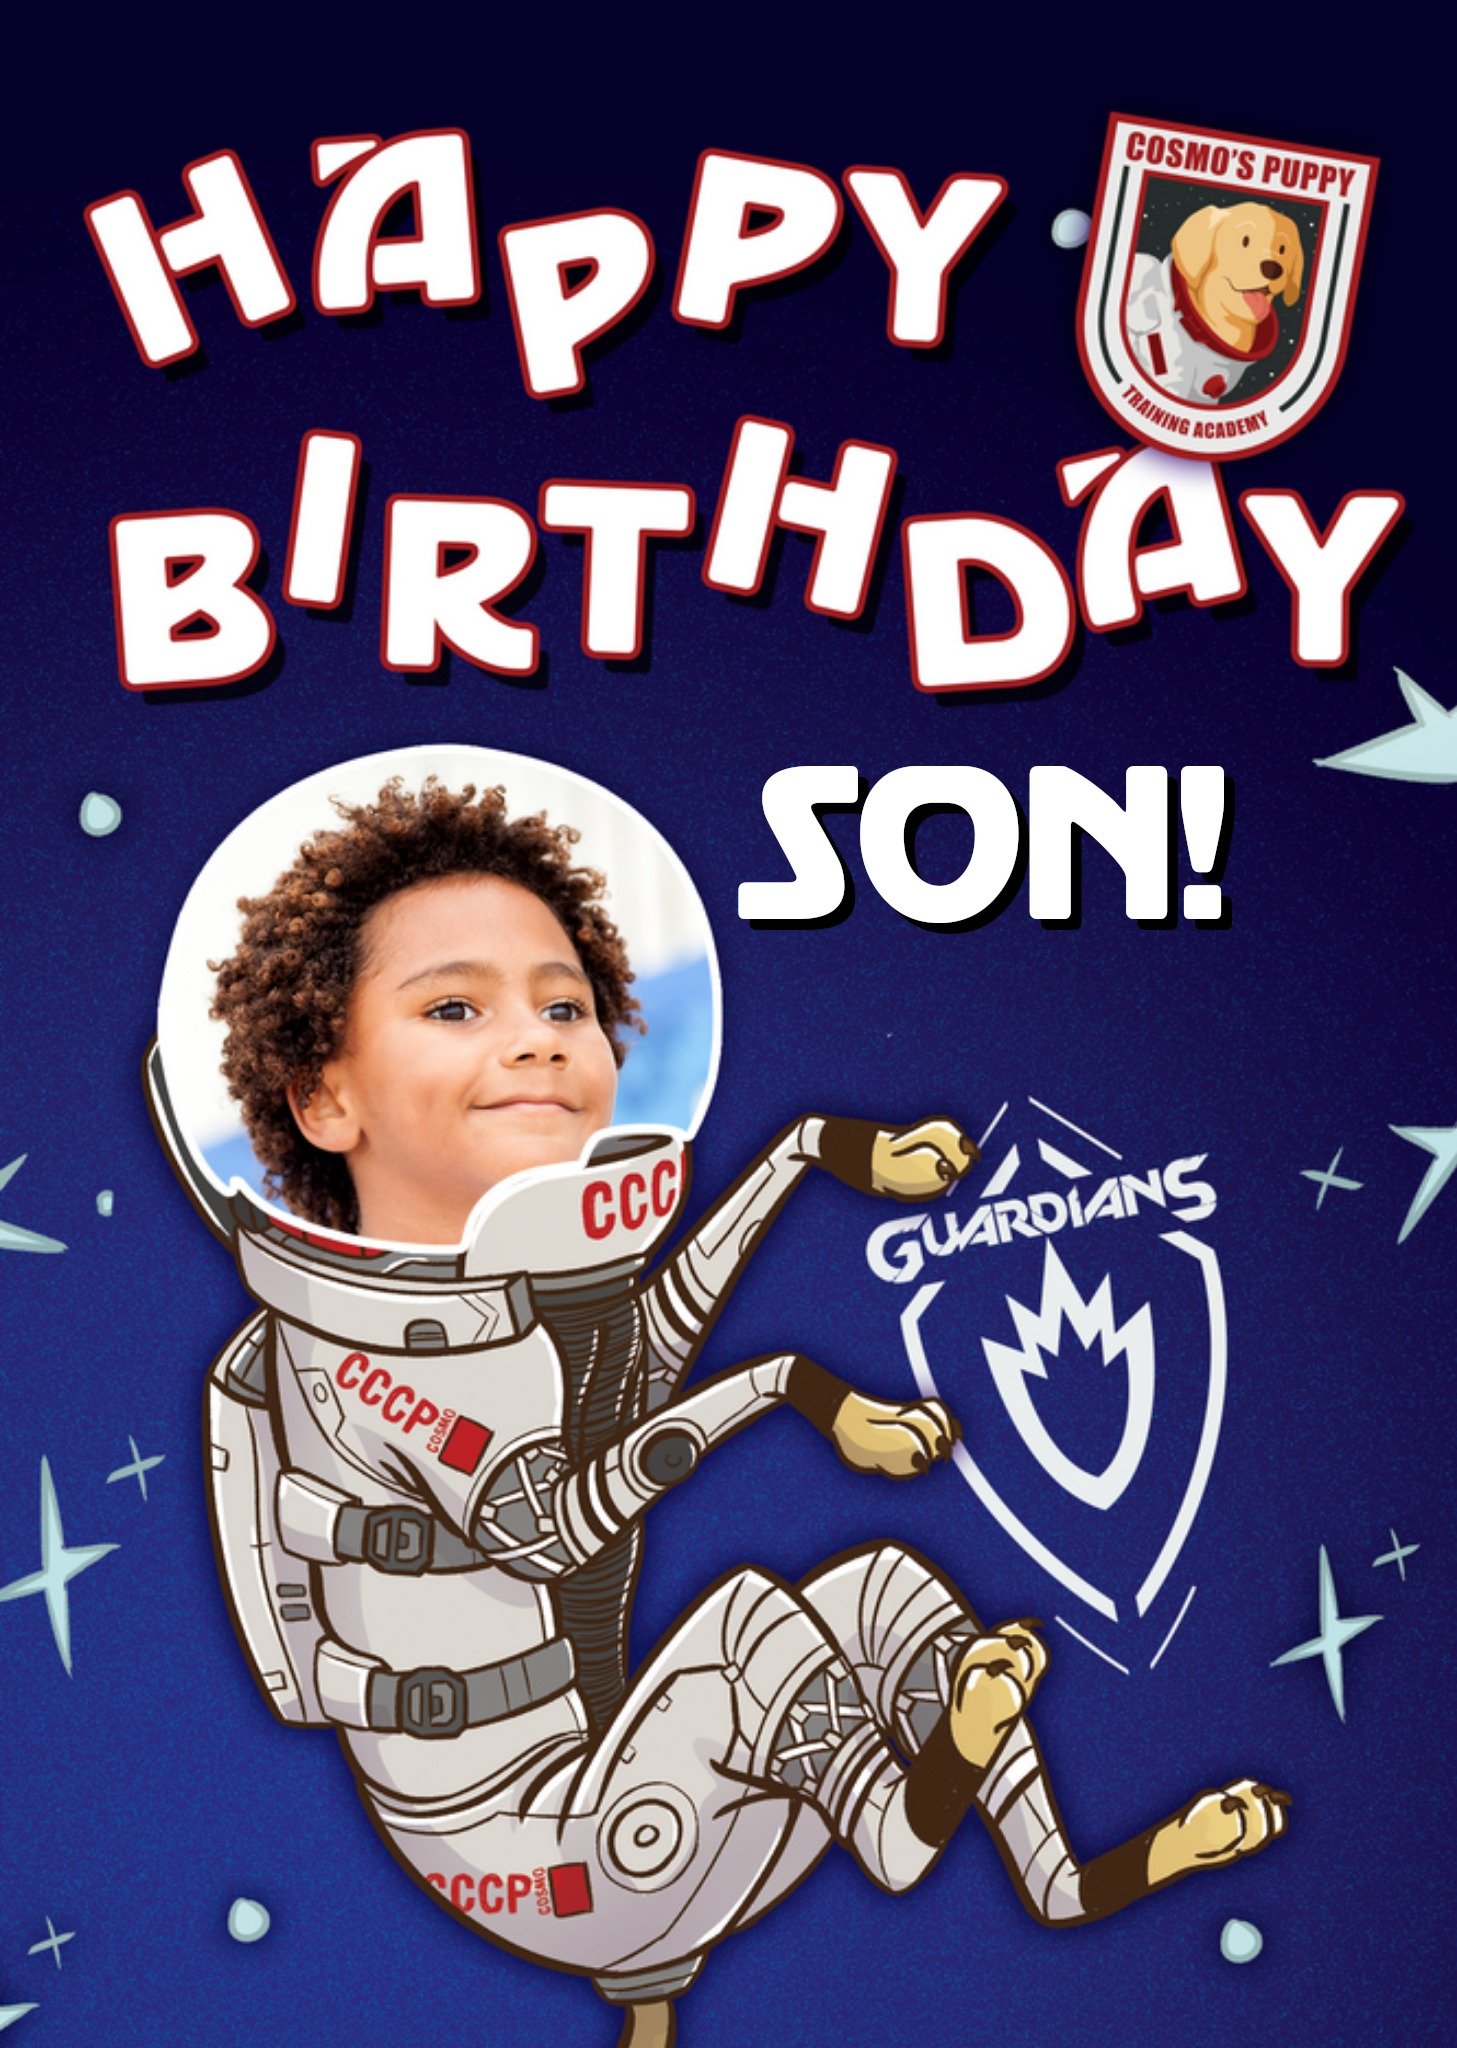 Disney Guardians Of The Galaxy Cosmo Son Photo Upload Birthday Card Ecard